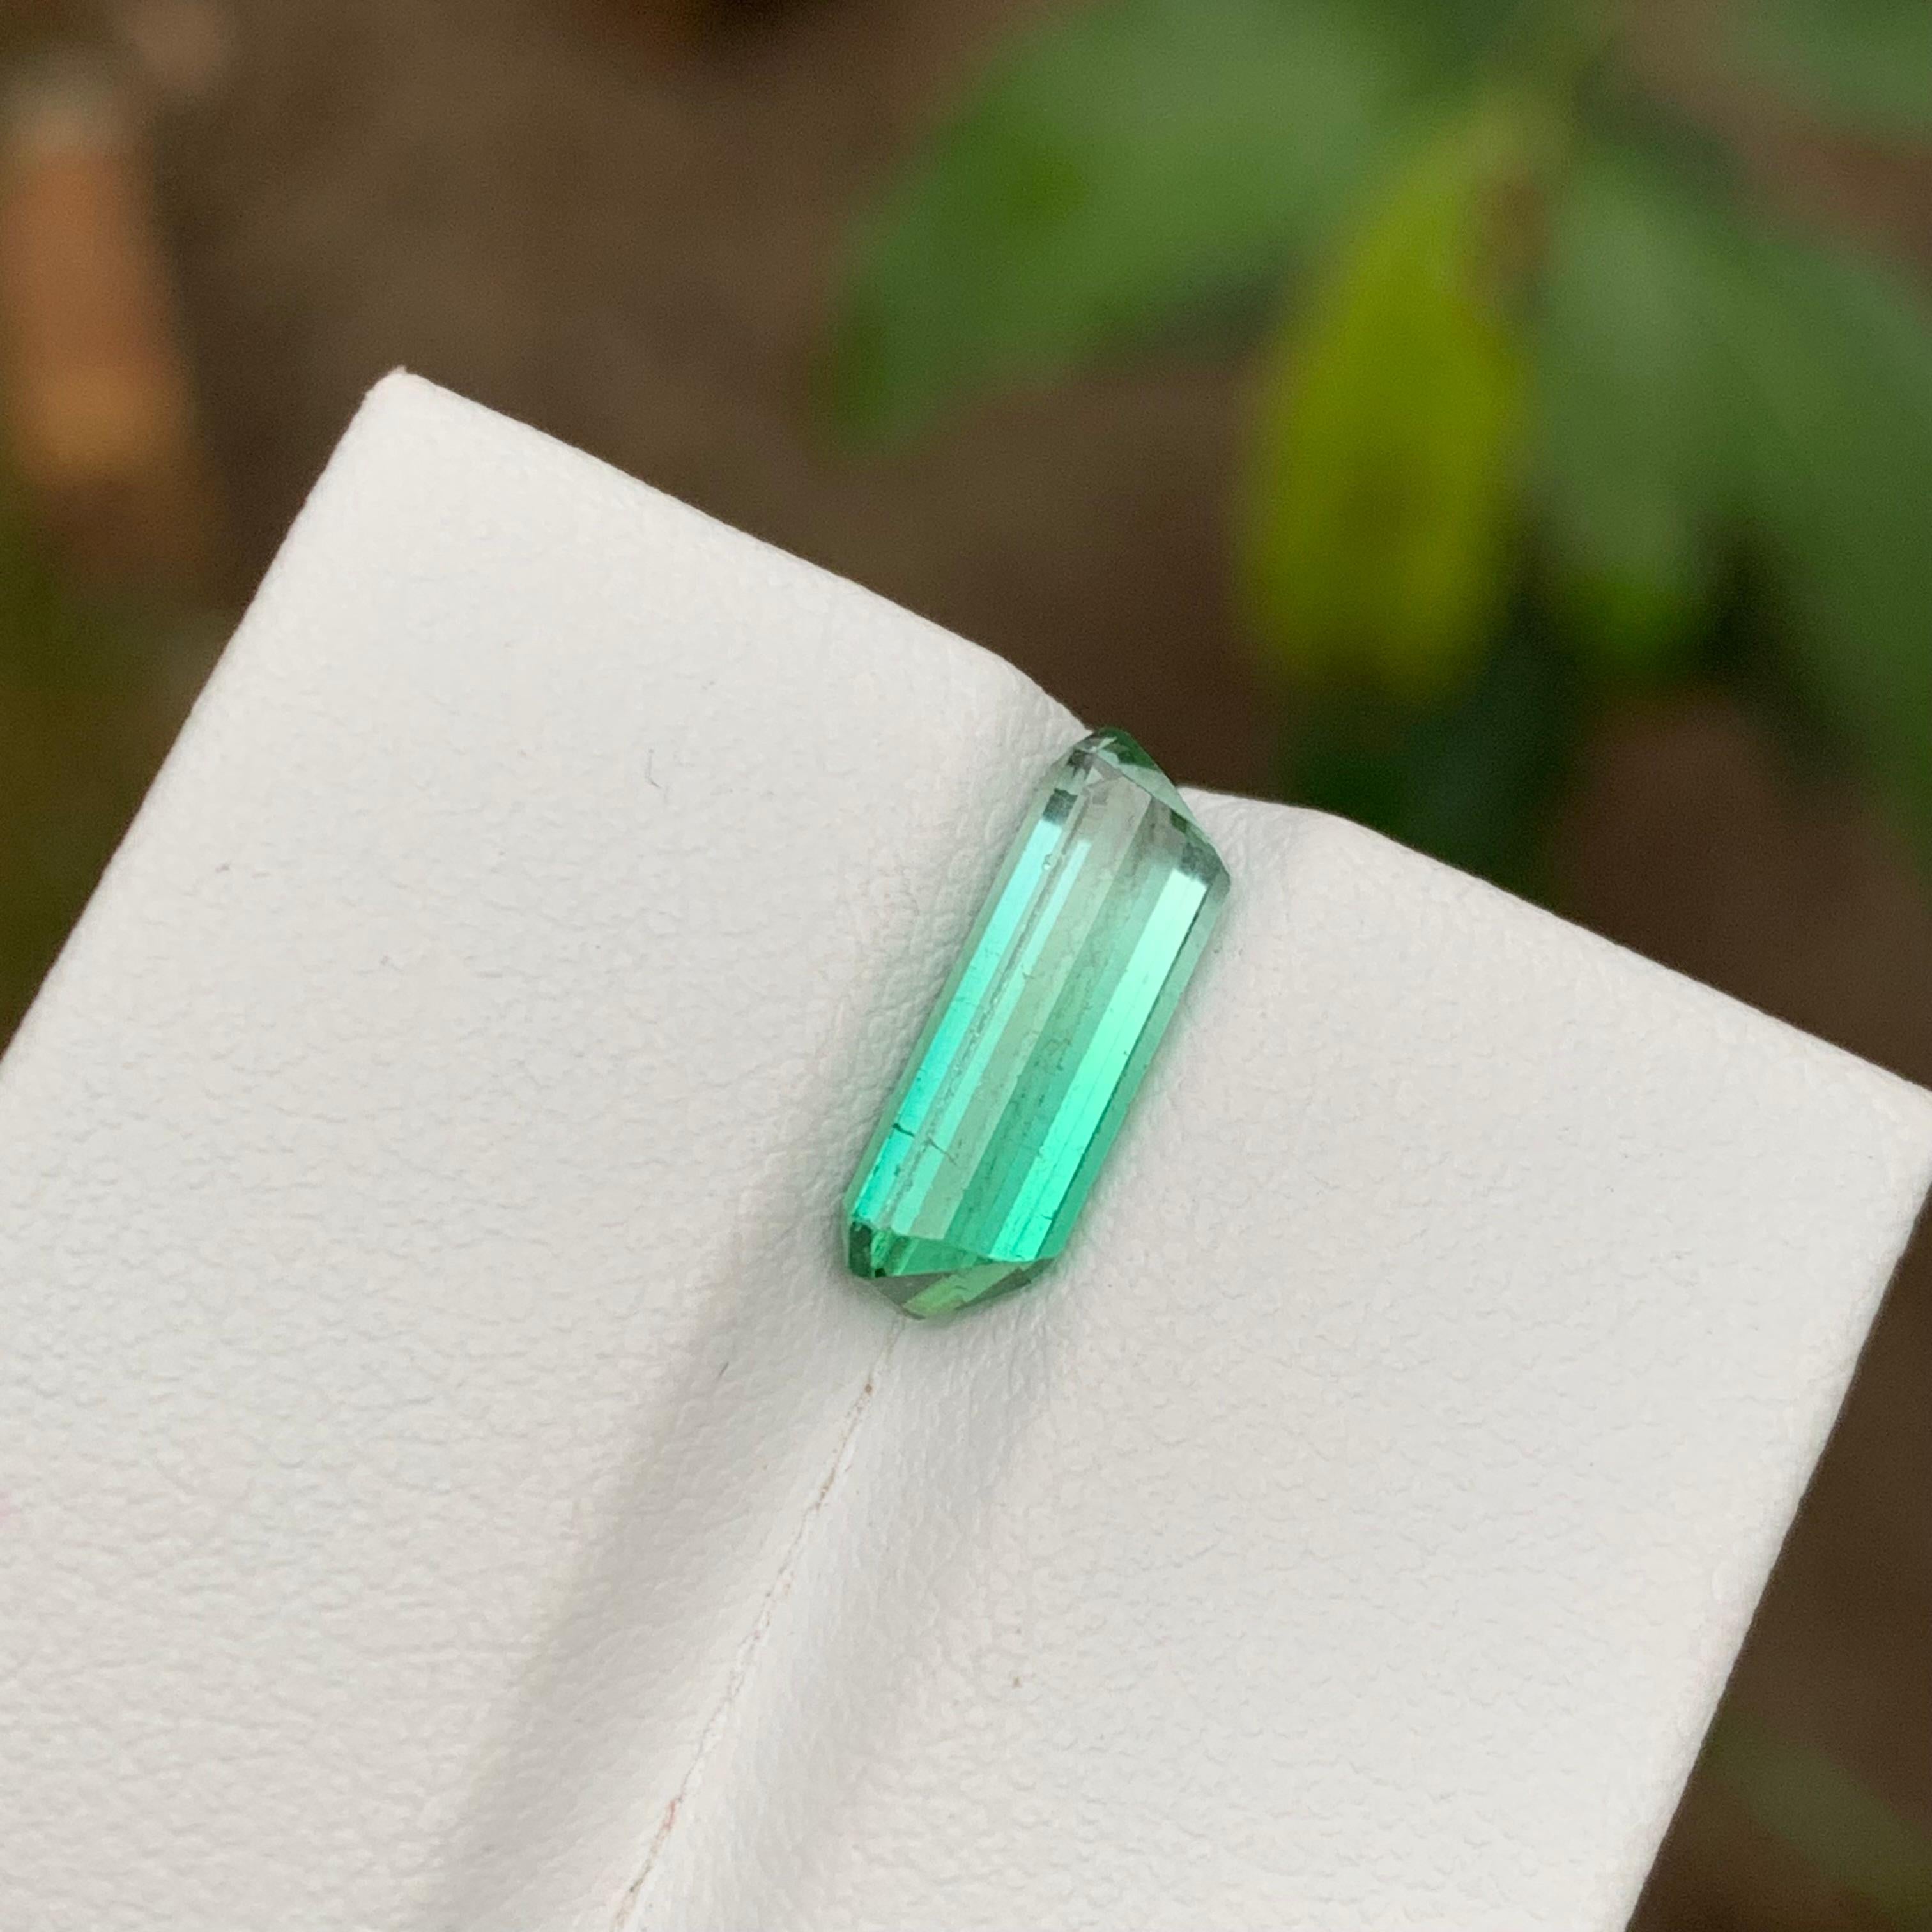 Rare Vivid Bluish Green Bicolor Tourmaline Gemstone 2.25 Ct Emerald Cut for Ring Neuf - En vente à Peshawar, PK